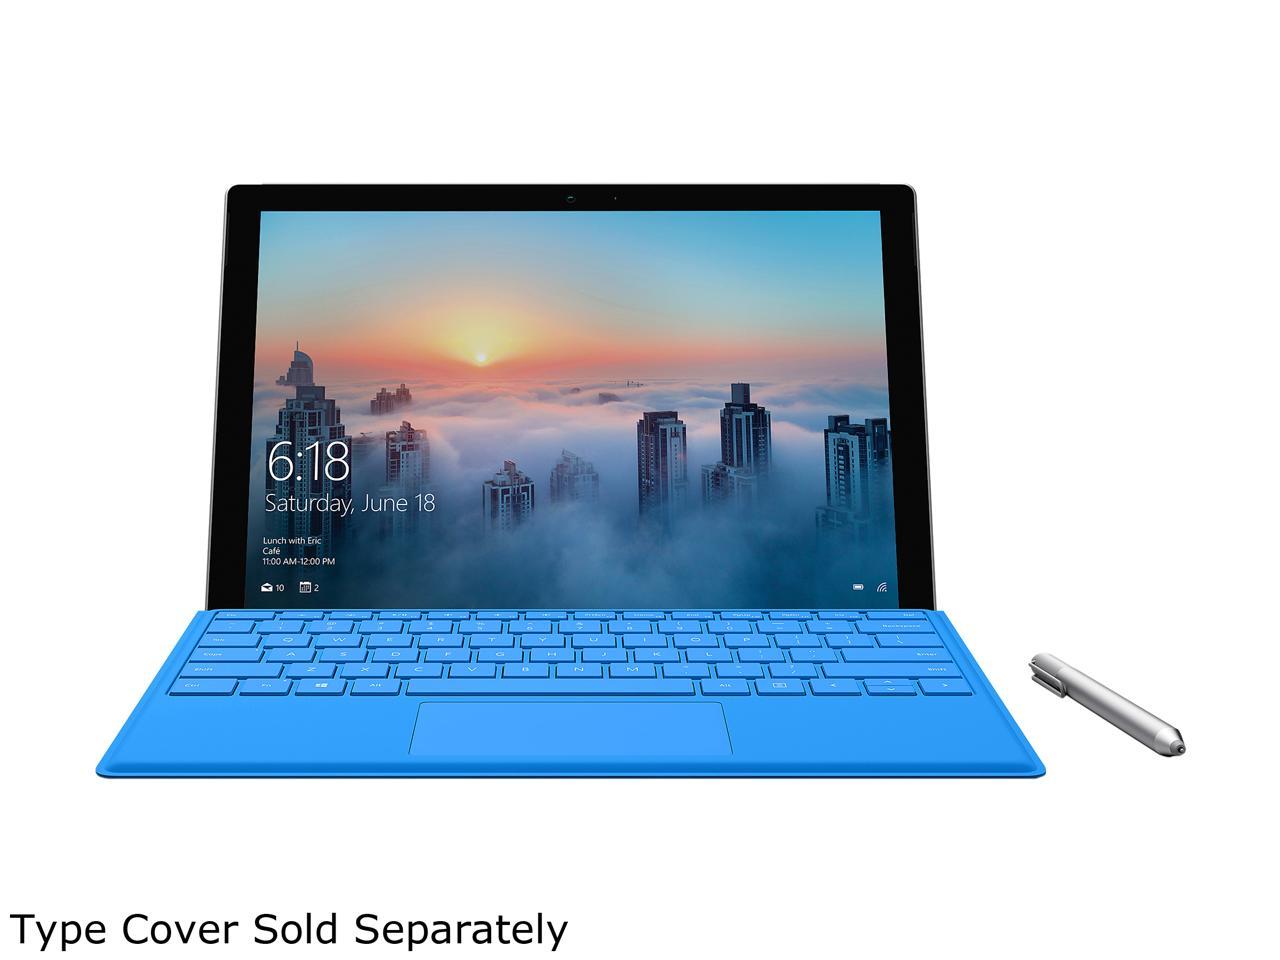 Microsoft Surface Pro 4 Cr3 Intel Core I5 6th Gen 6300u 2 40 Ghz 8 Gb Memory 256 Gb Ssd 12 3 Touchscreen 2736 X 14 Tablet Windows 10 Pro 64 Bit Newegg Com